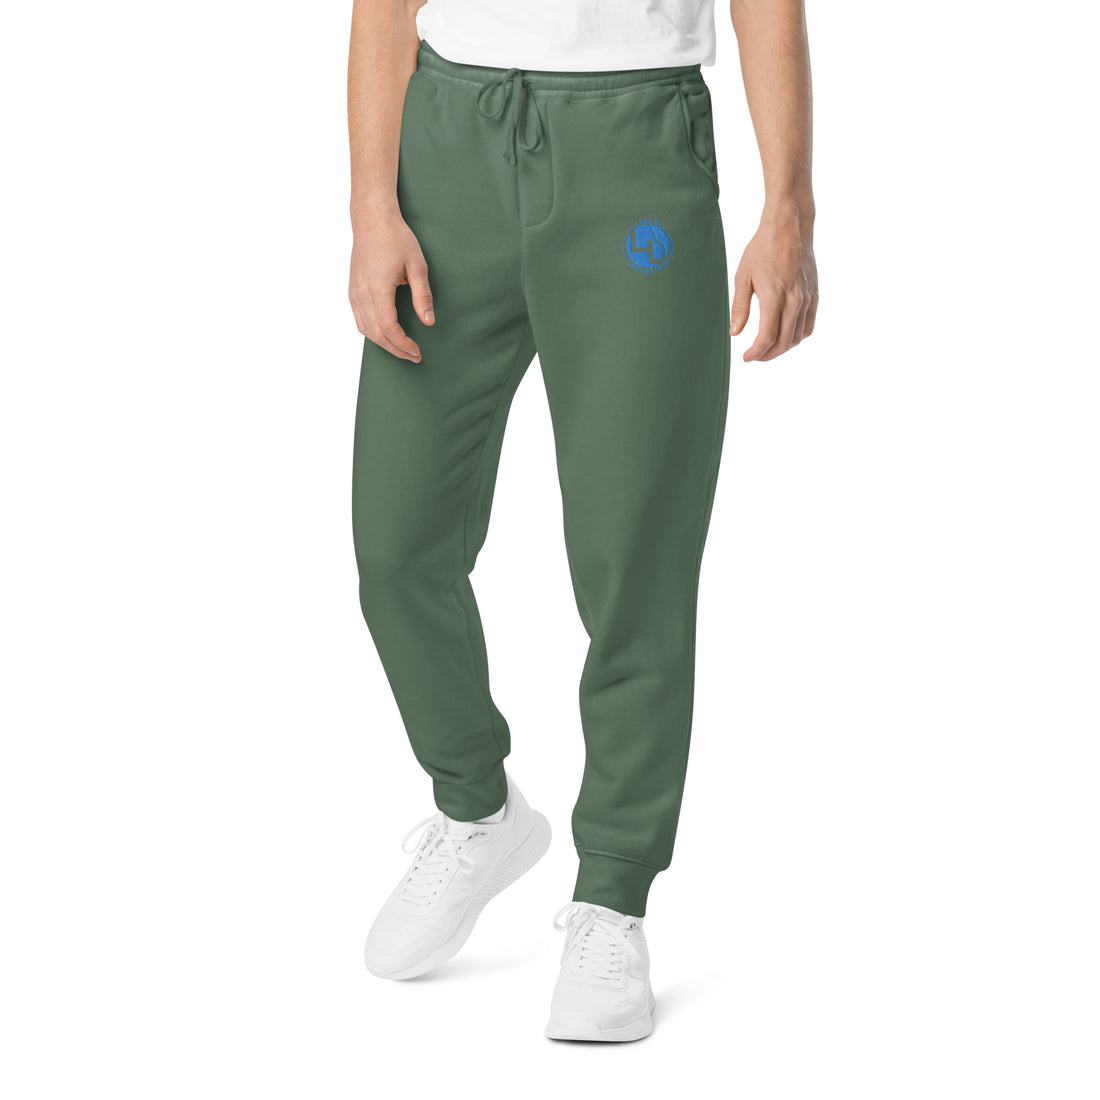 Unisex pigment-dyed sweatpants with Luke&